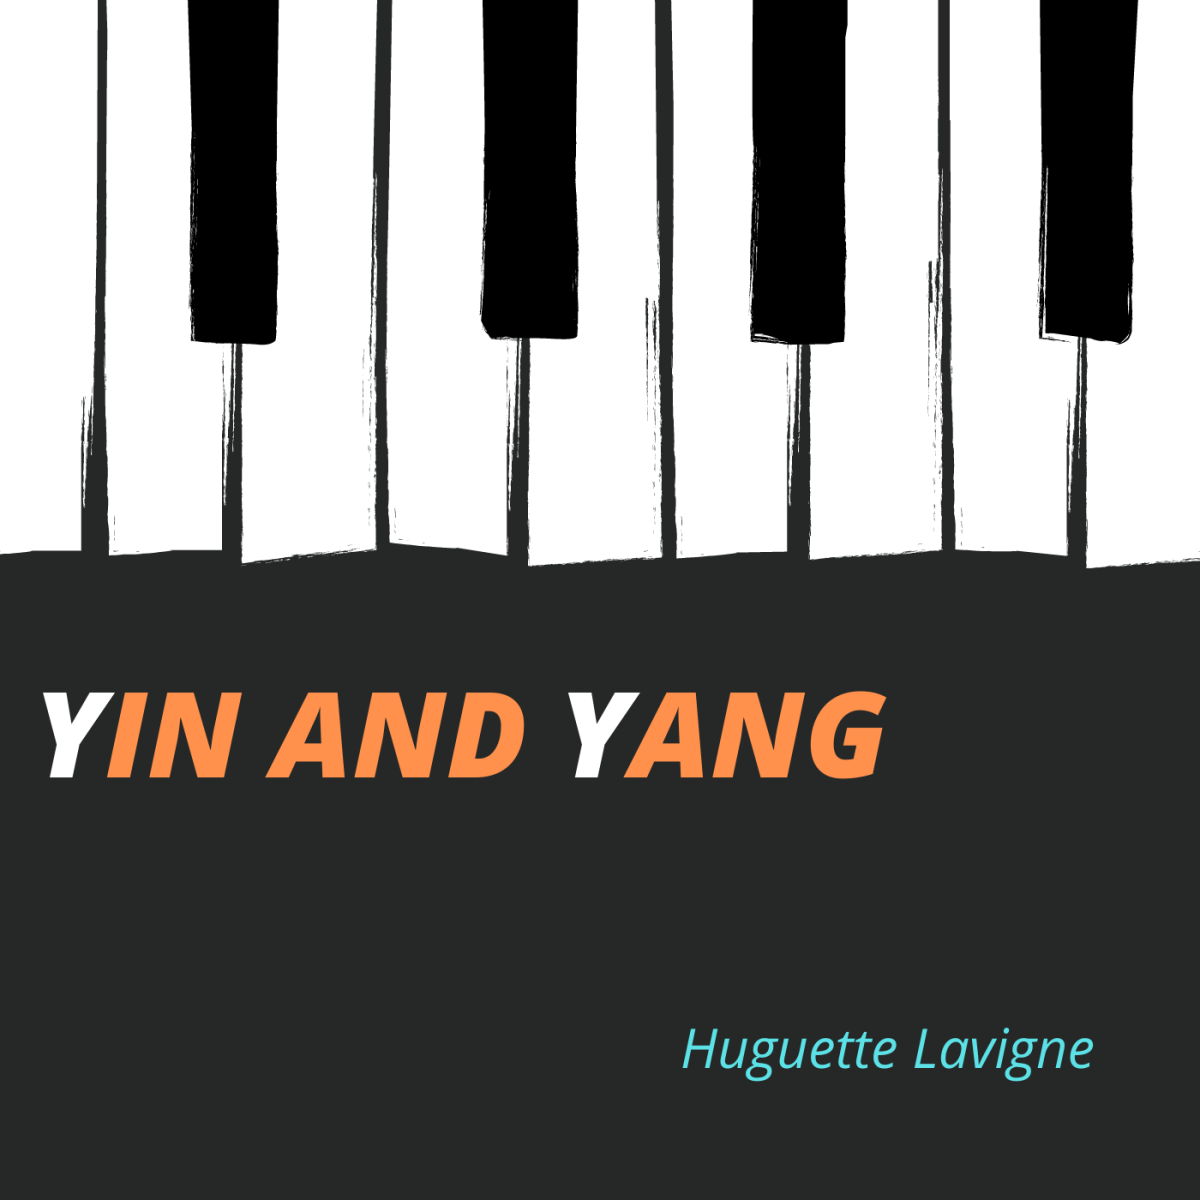     Ottawa Composer Huguette Lavigne Beautifully Balances Dark and Light with Captivating New Single "Yin and Yang"